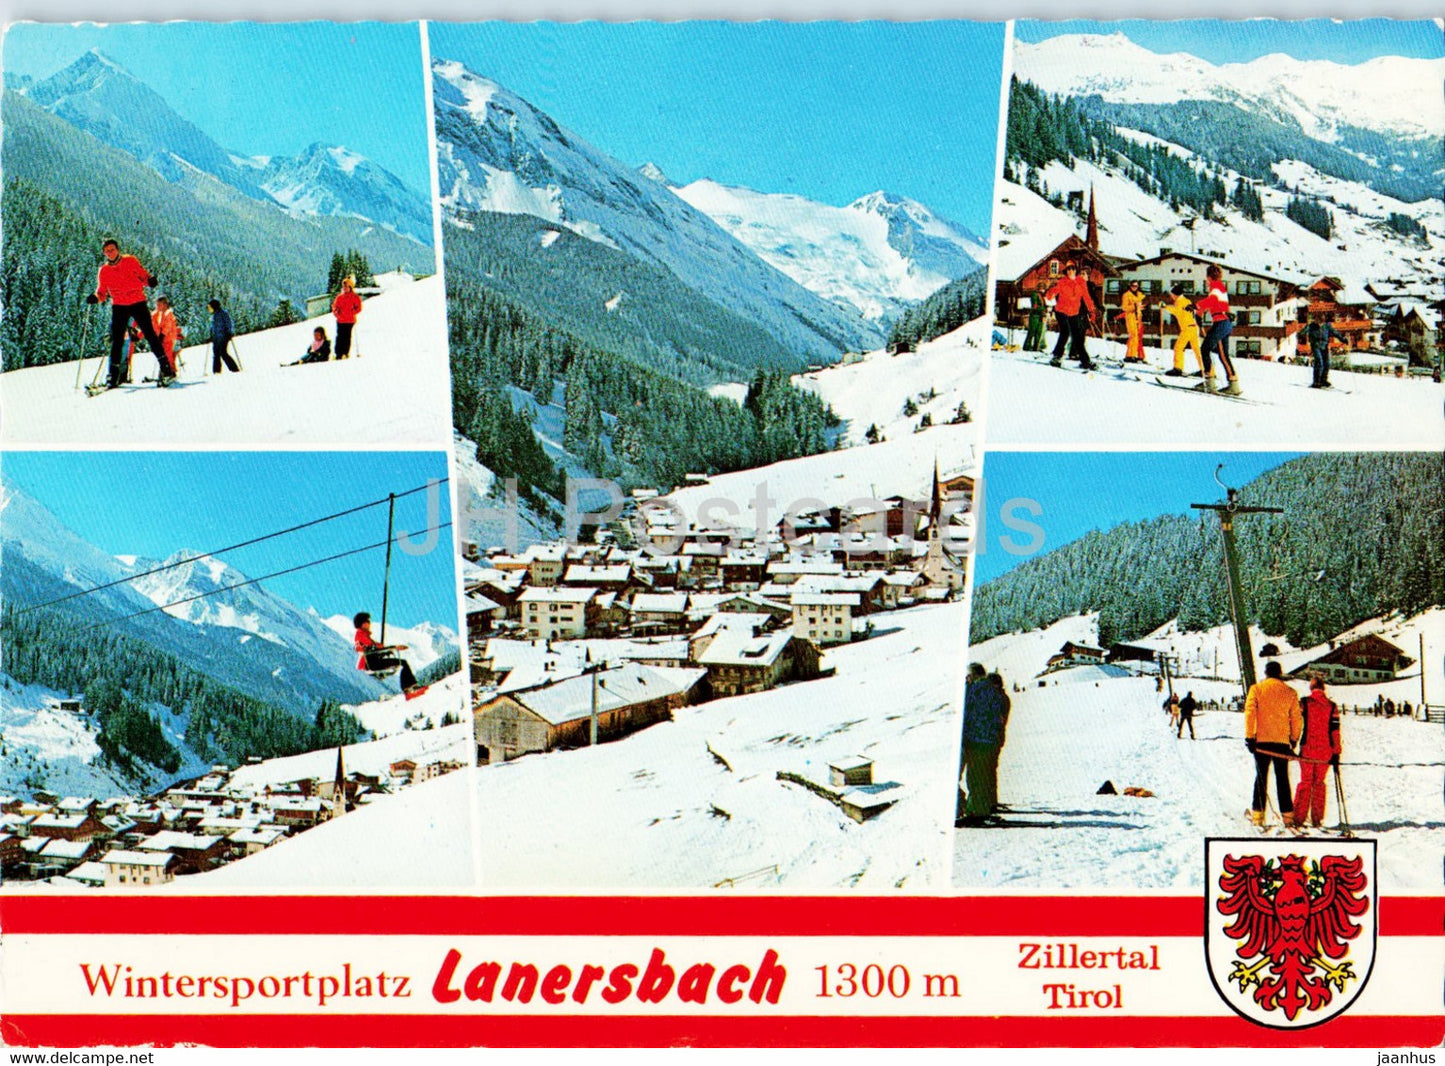 Wintersportplatz Lanersbach 1300 m - Zillertal Tirol - skiing - 1977 - Austria - used - JH Postcards